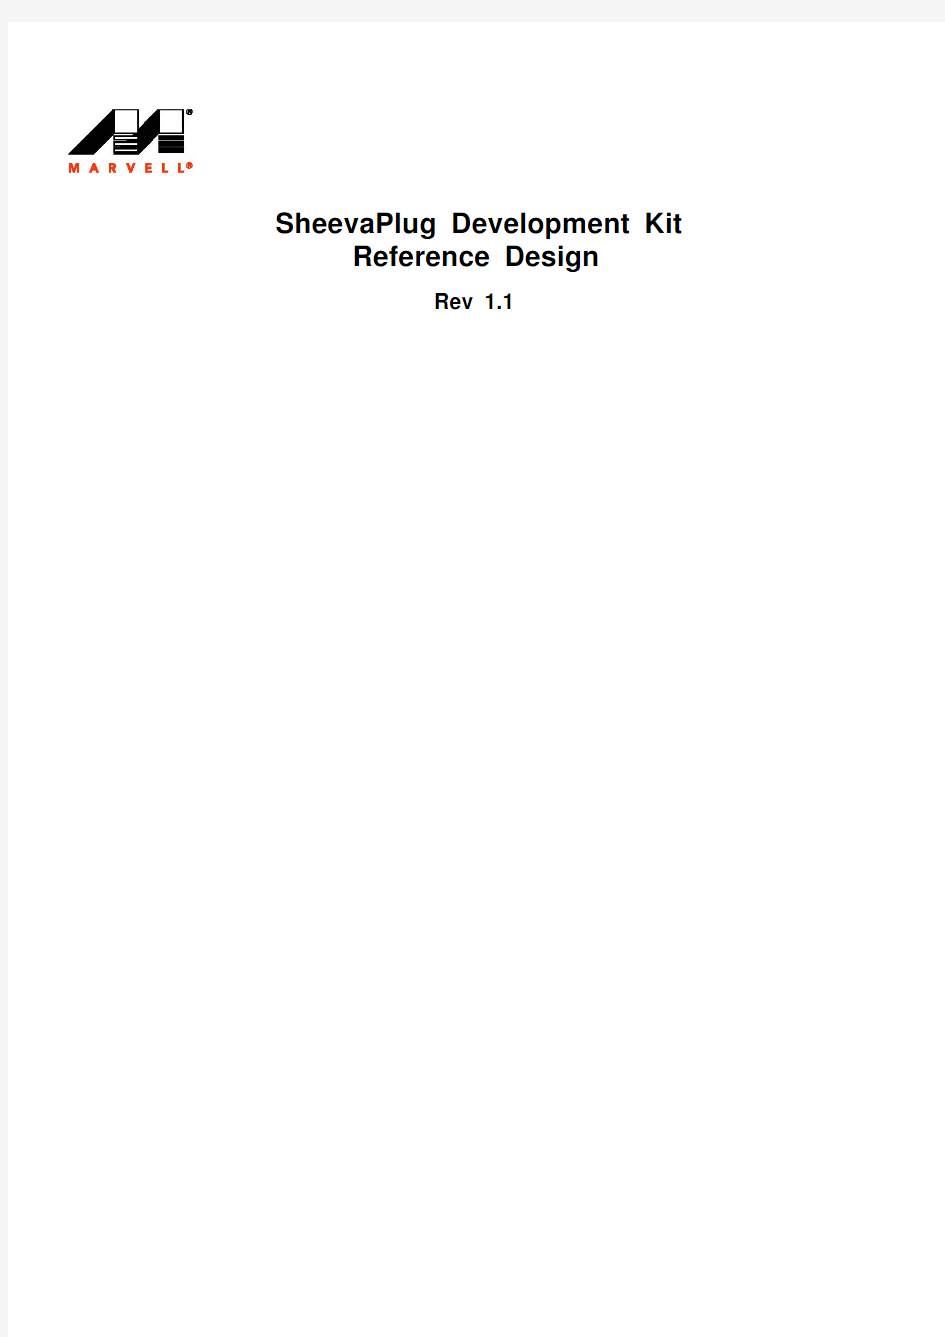 SheevaPlug DevKit Reference Design-Rev1.1